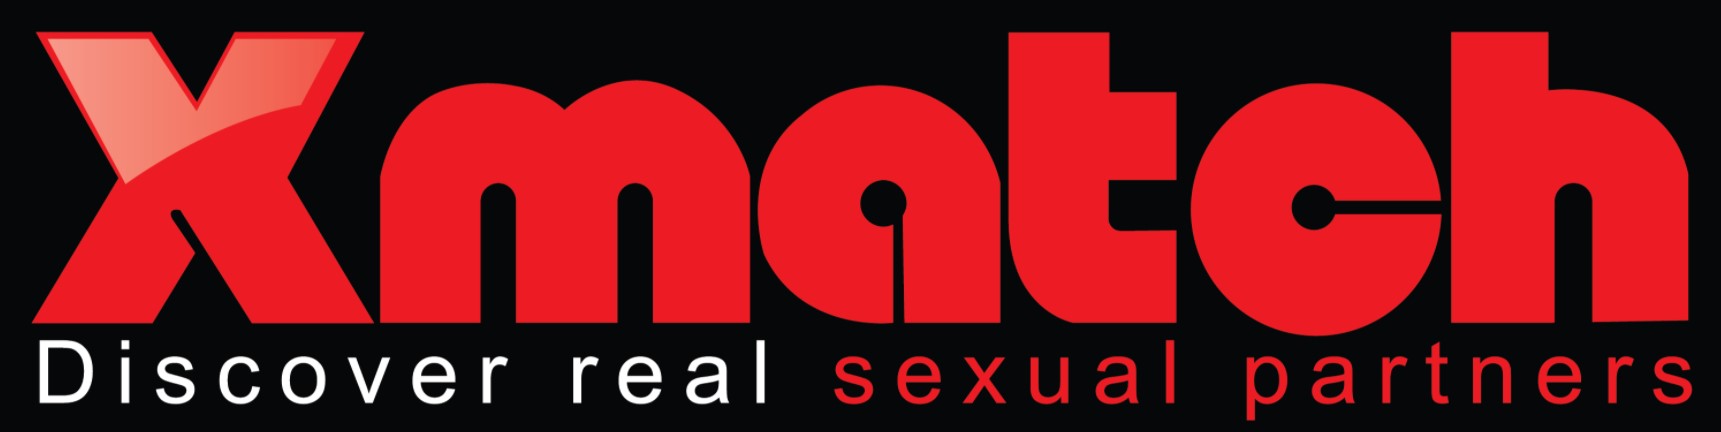 logo Xmatch